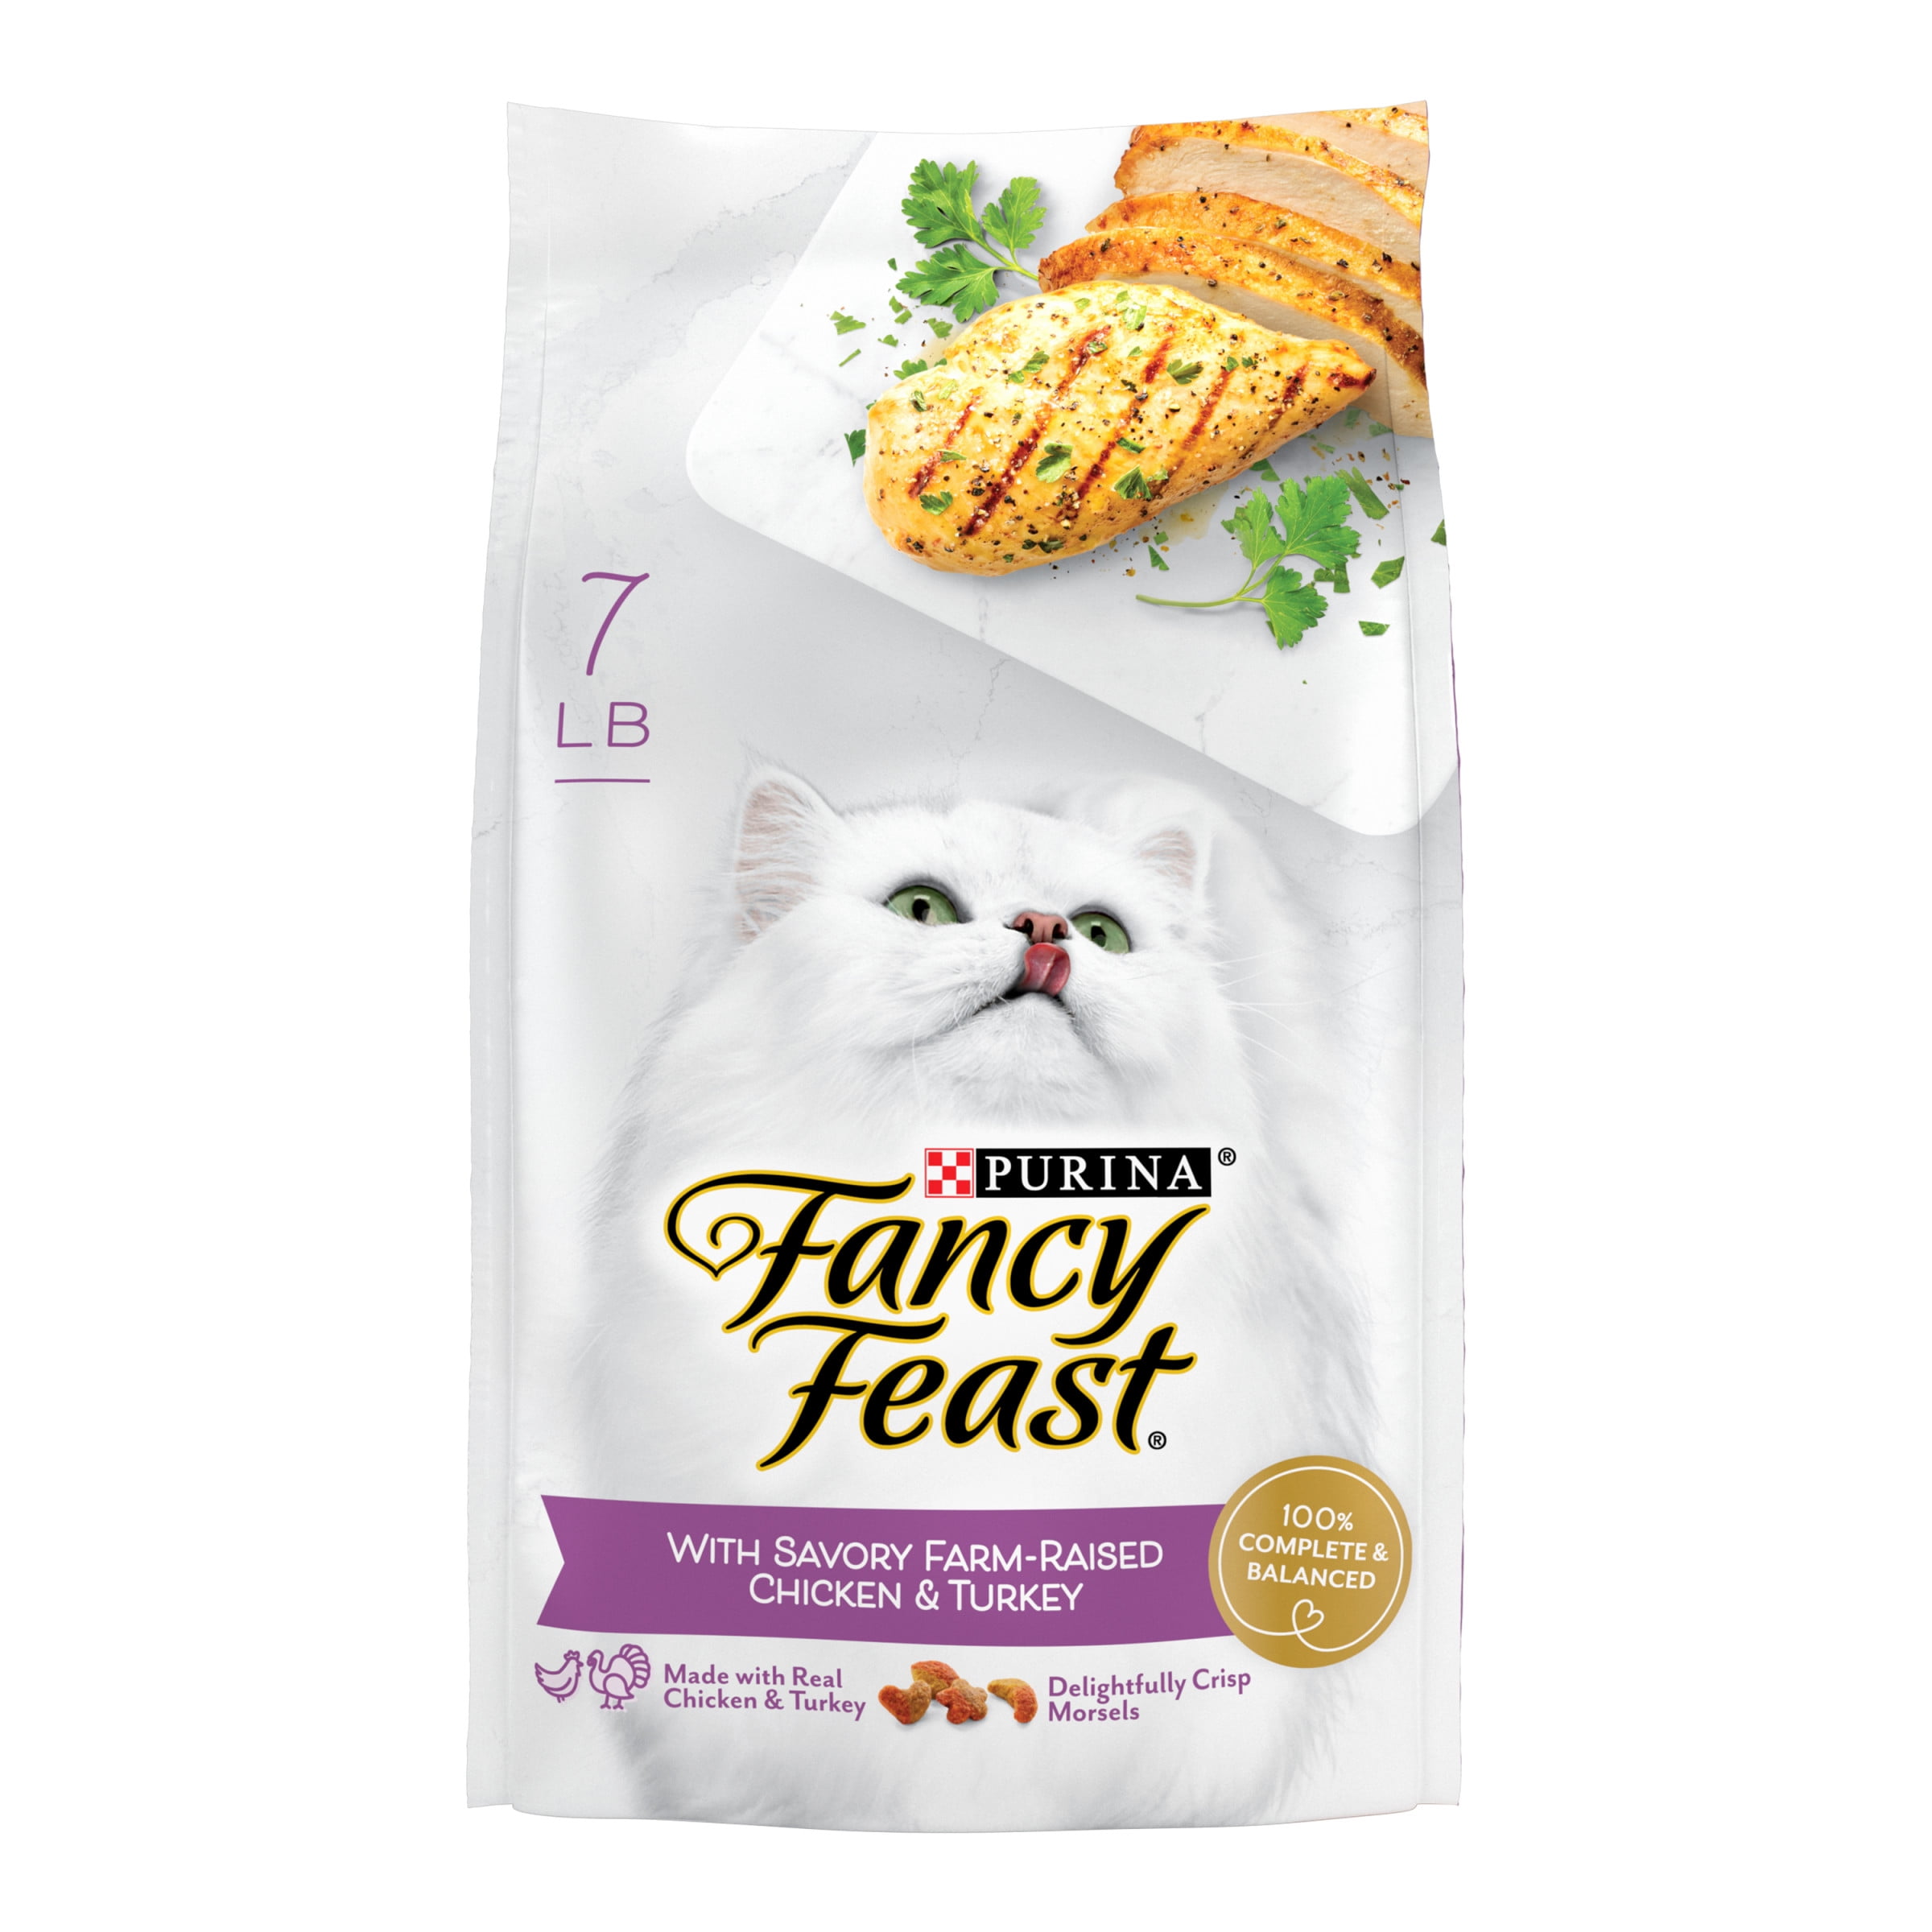 Purina Fancy Feast Dry Cat Food Savory Farm Raised Chicken Turkey, 7 lb Bag